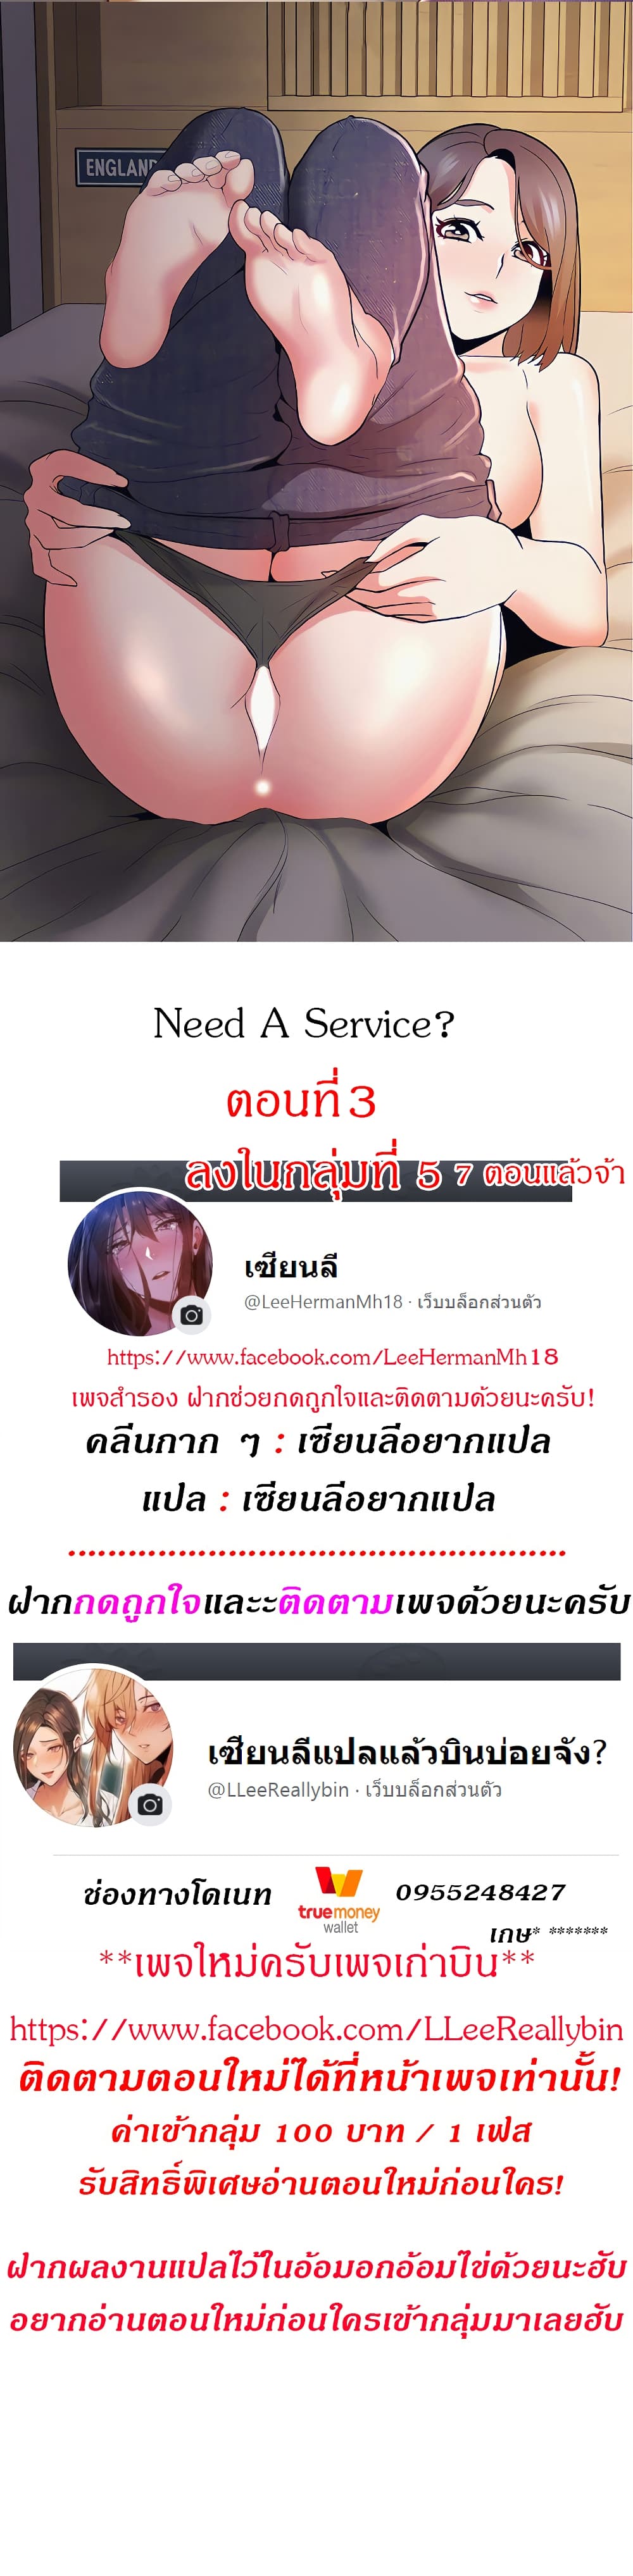 Need A Service 3 (1)